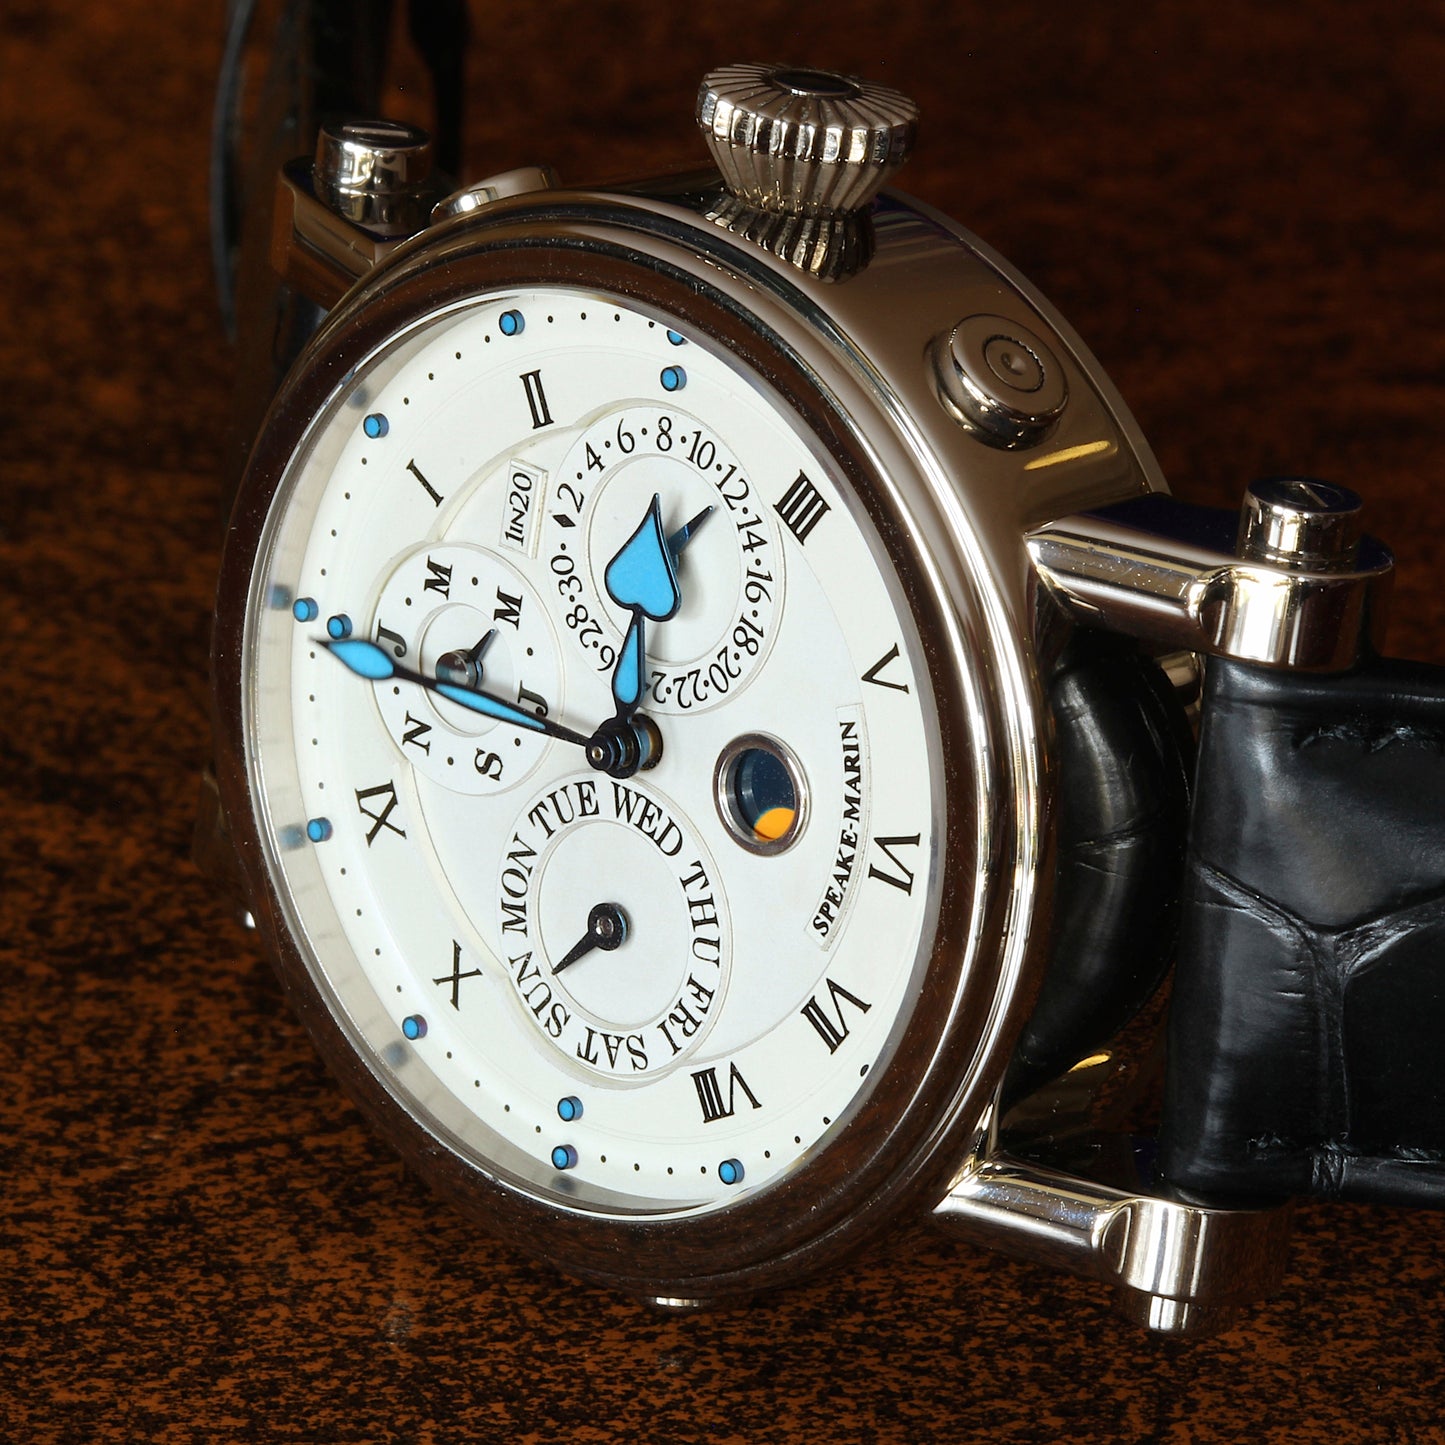 Estate 18k WG Speake-Marin 1 in 20 Perpetual Calendar watch